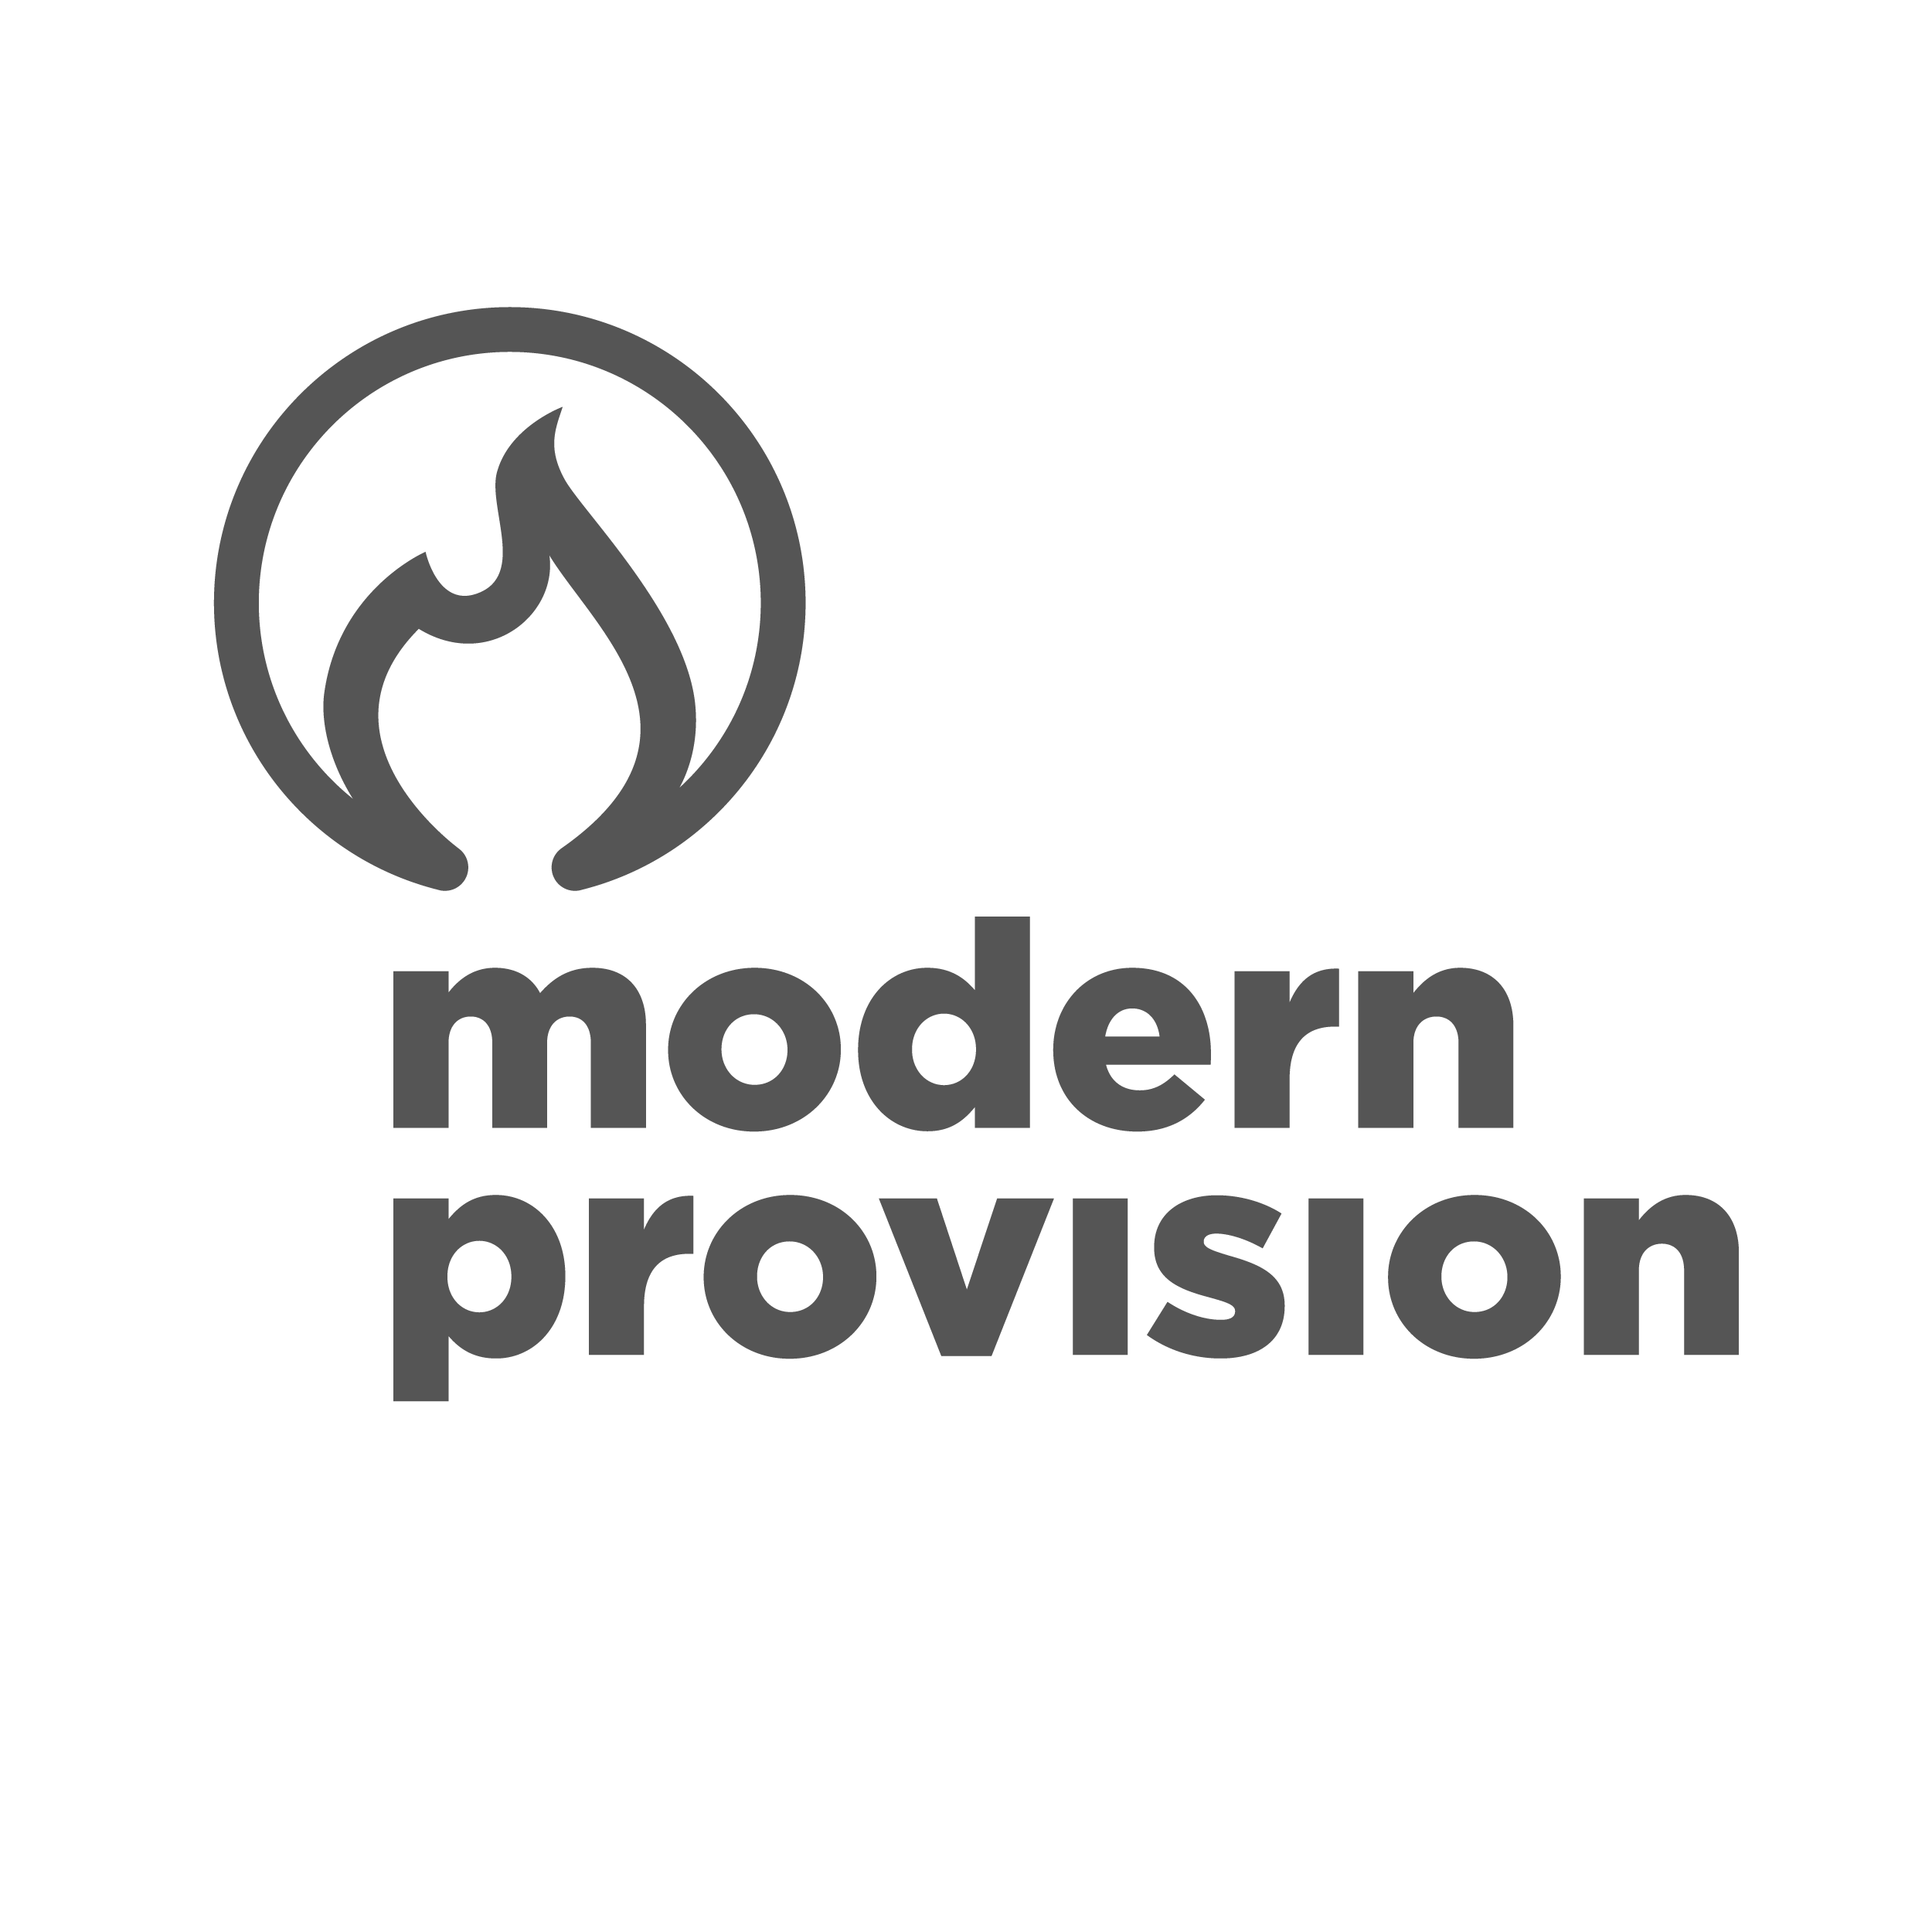 121modernprovision-portfolio-id-2500x2500.png